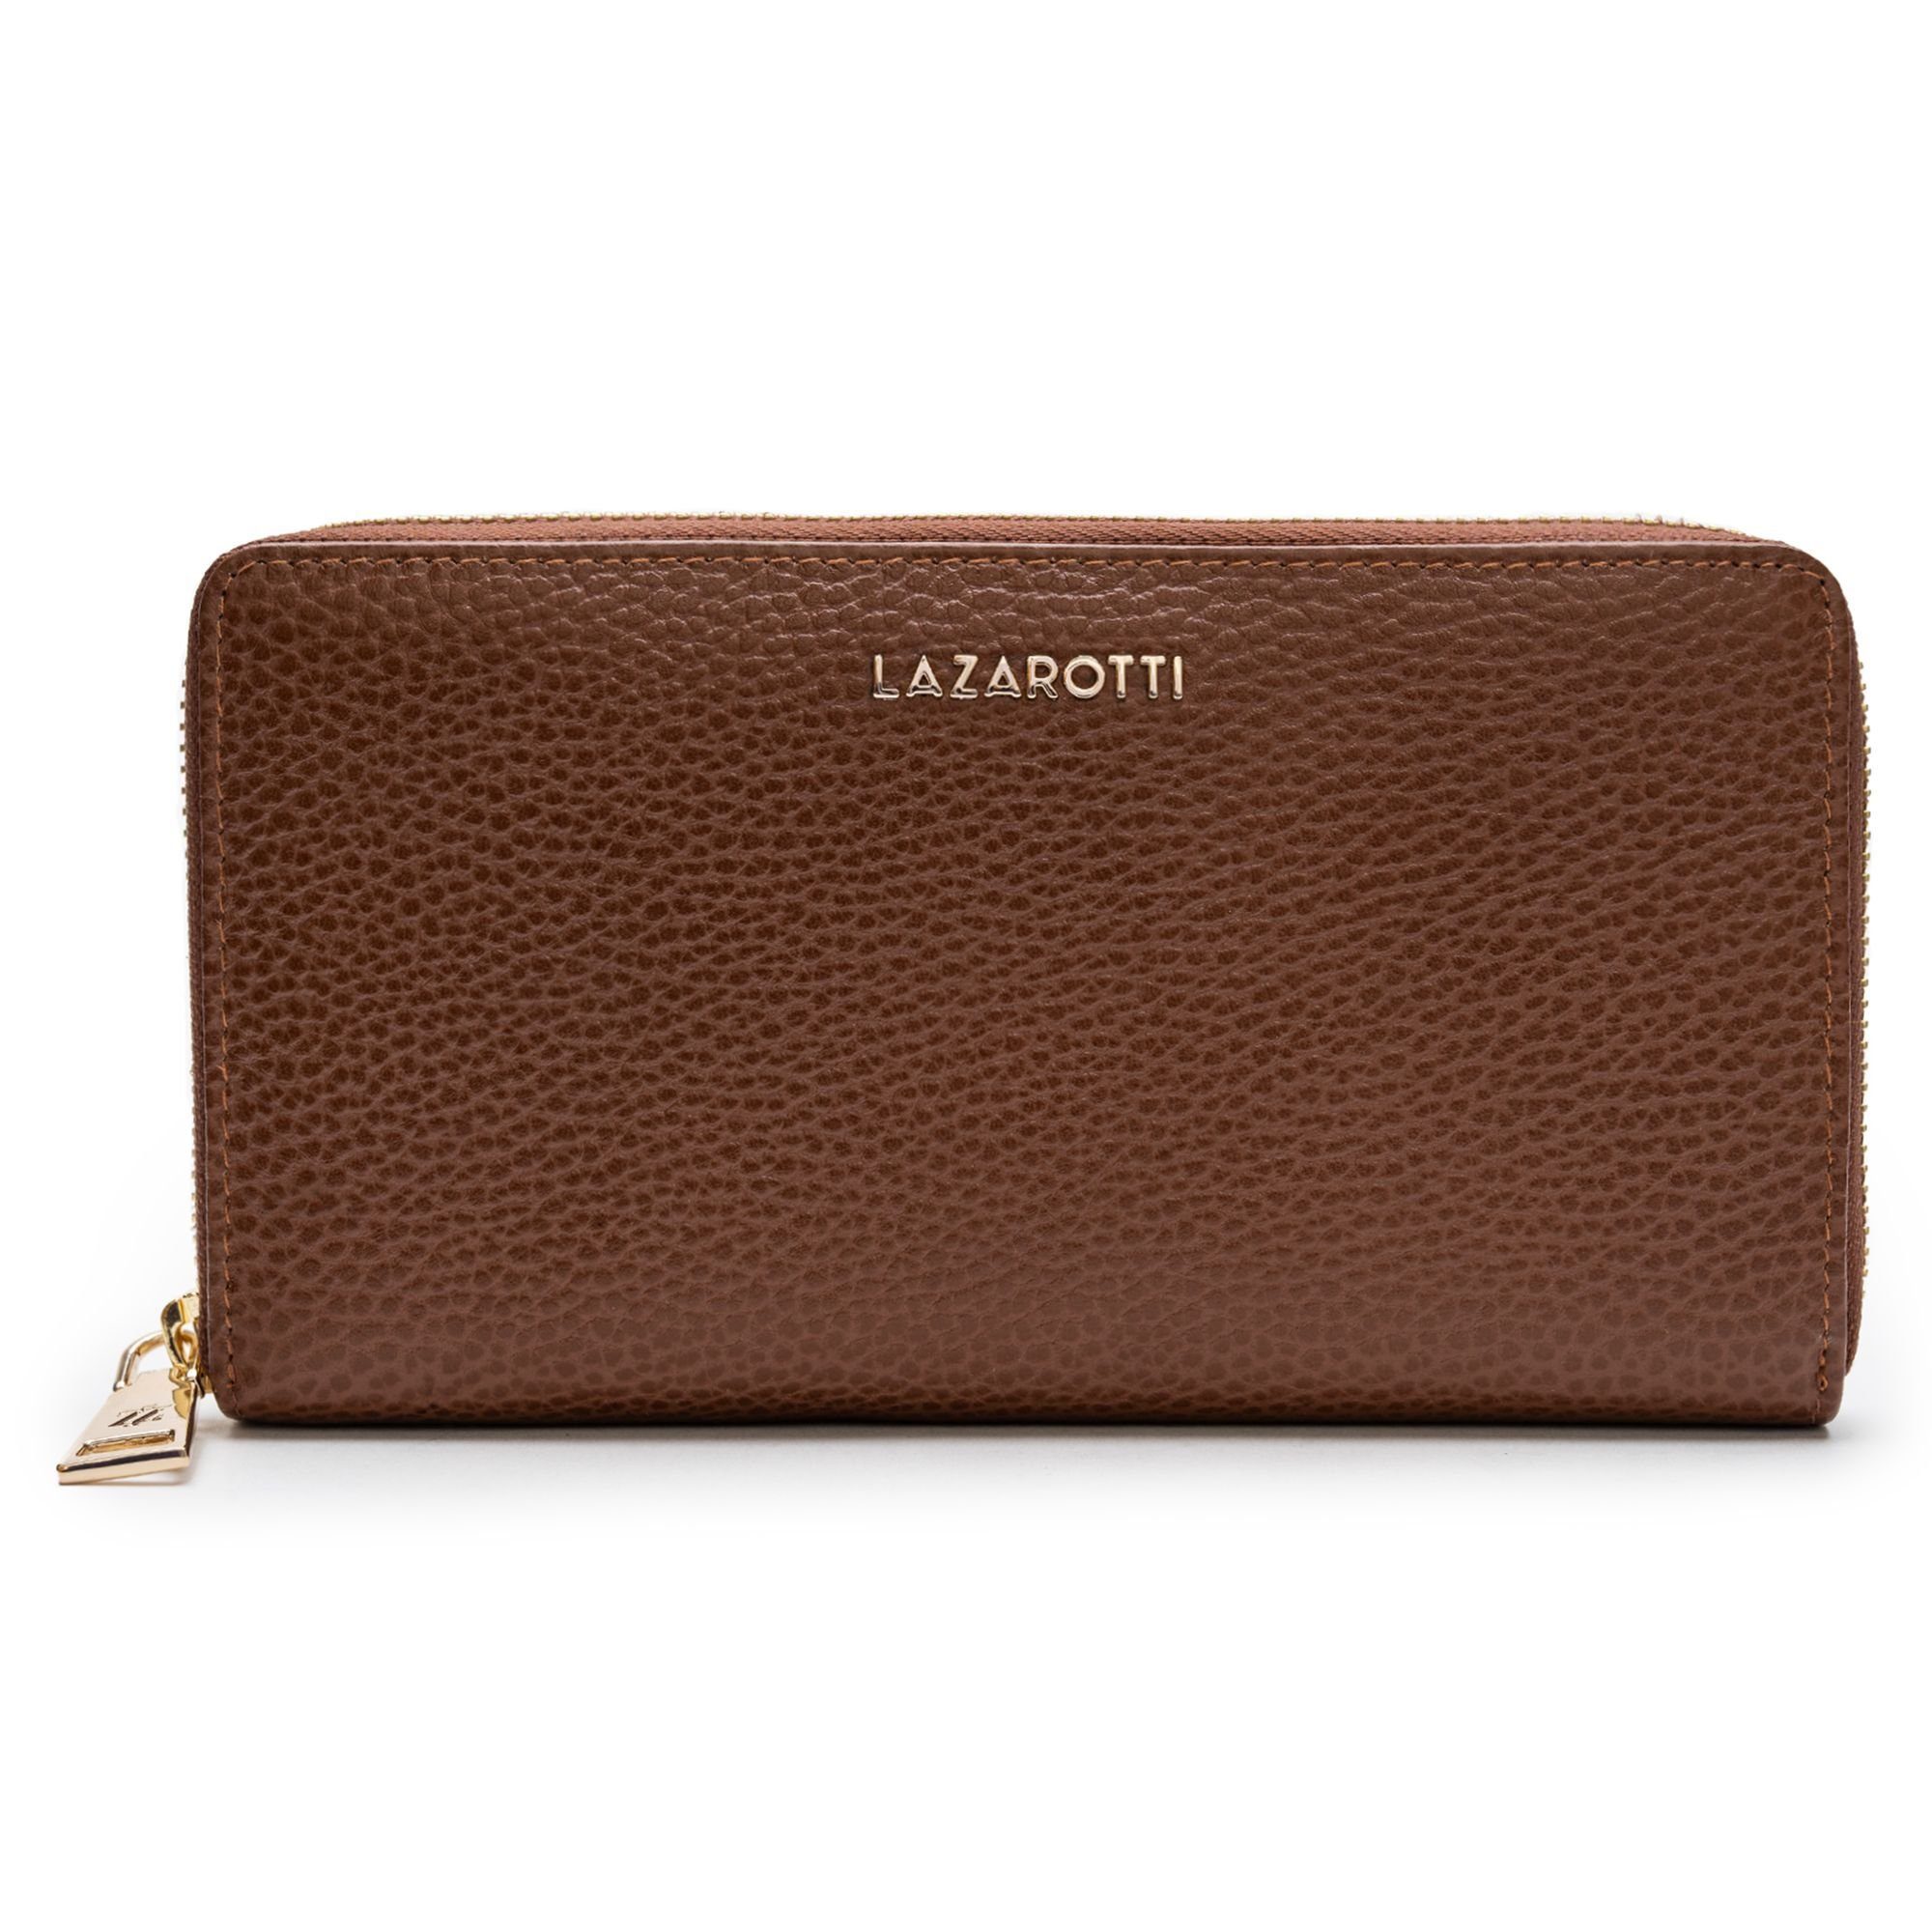 Lazarotti Geldbörse Bologna Leather, Leder brown